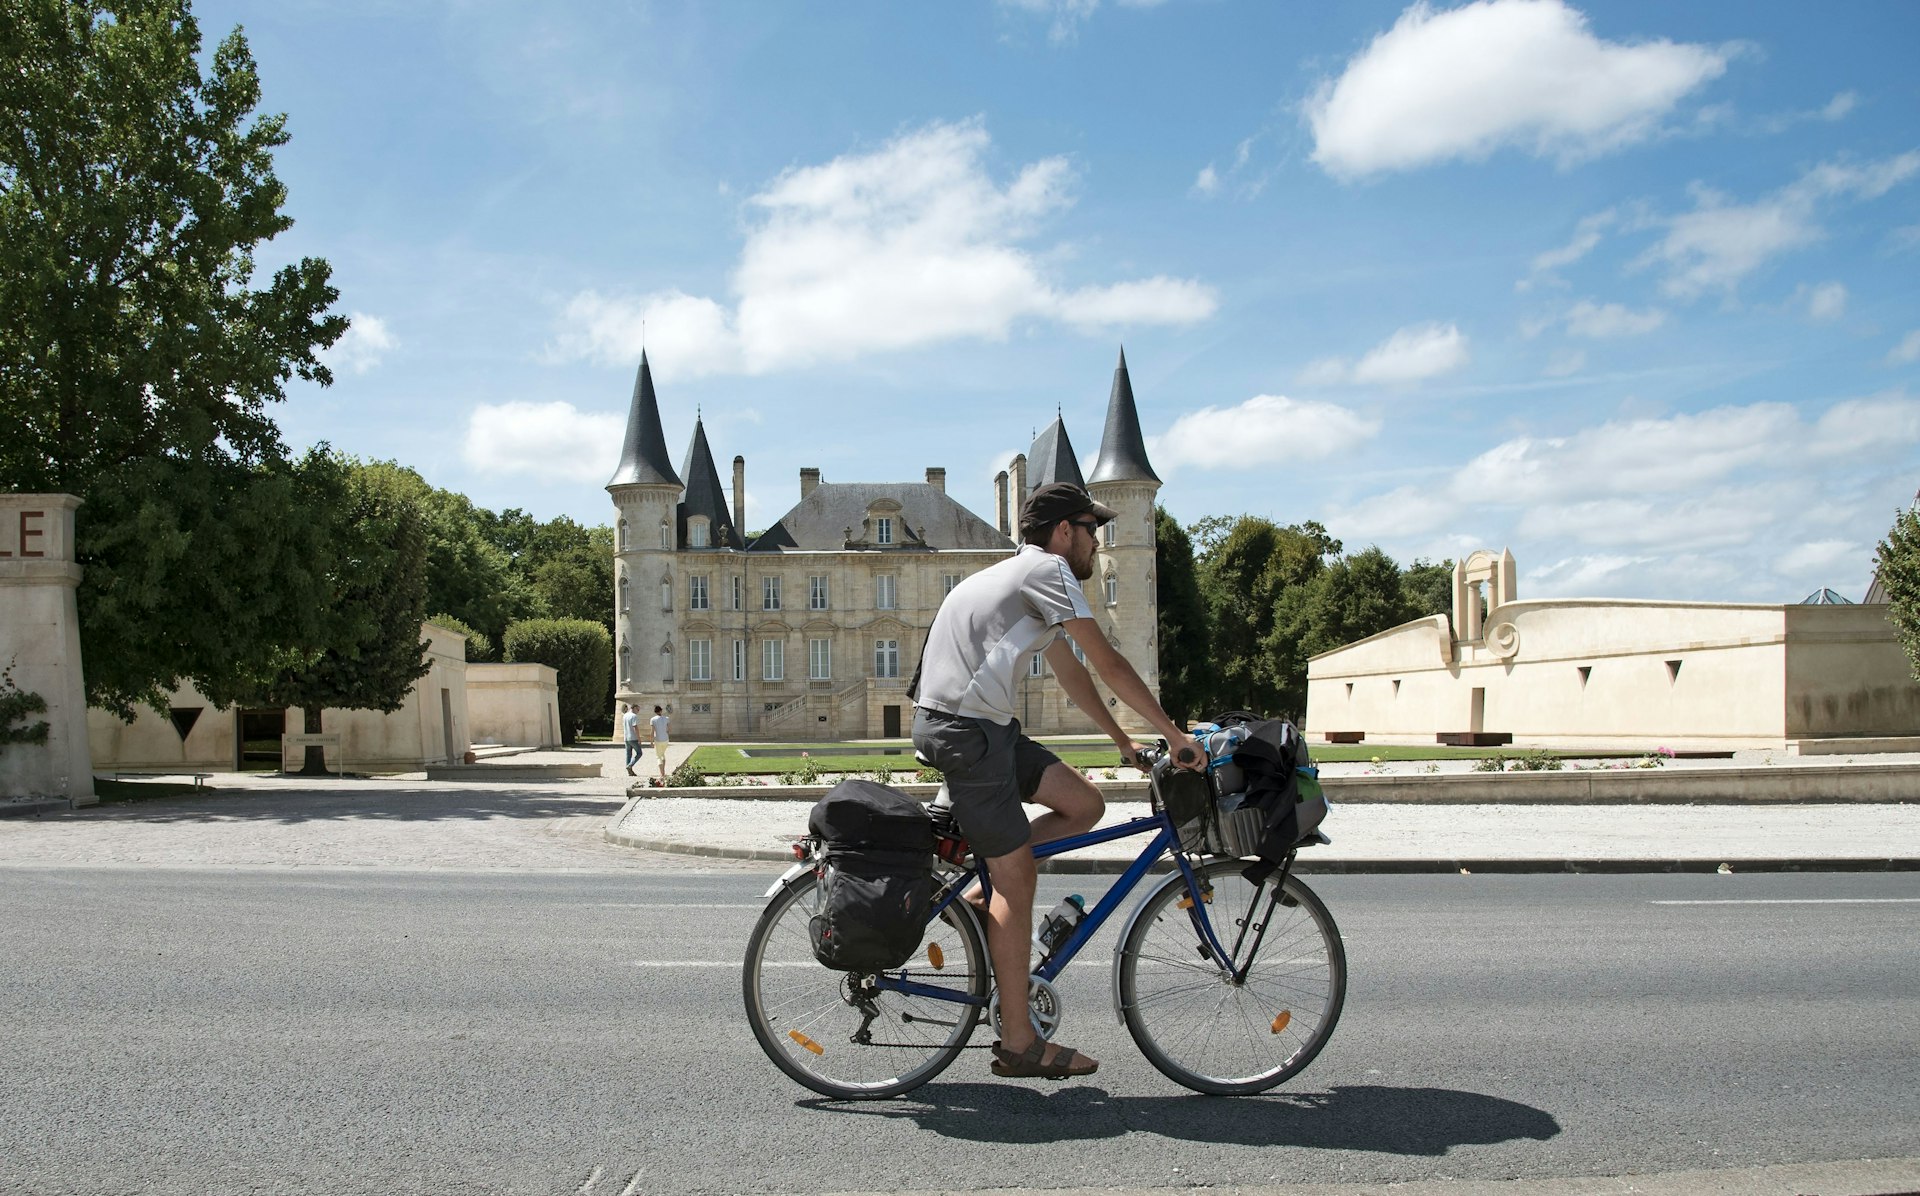  A man cycles past Château Pichon Longueville, Pauillac, Gironde, France